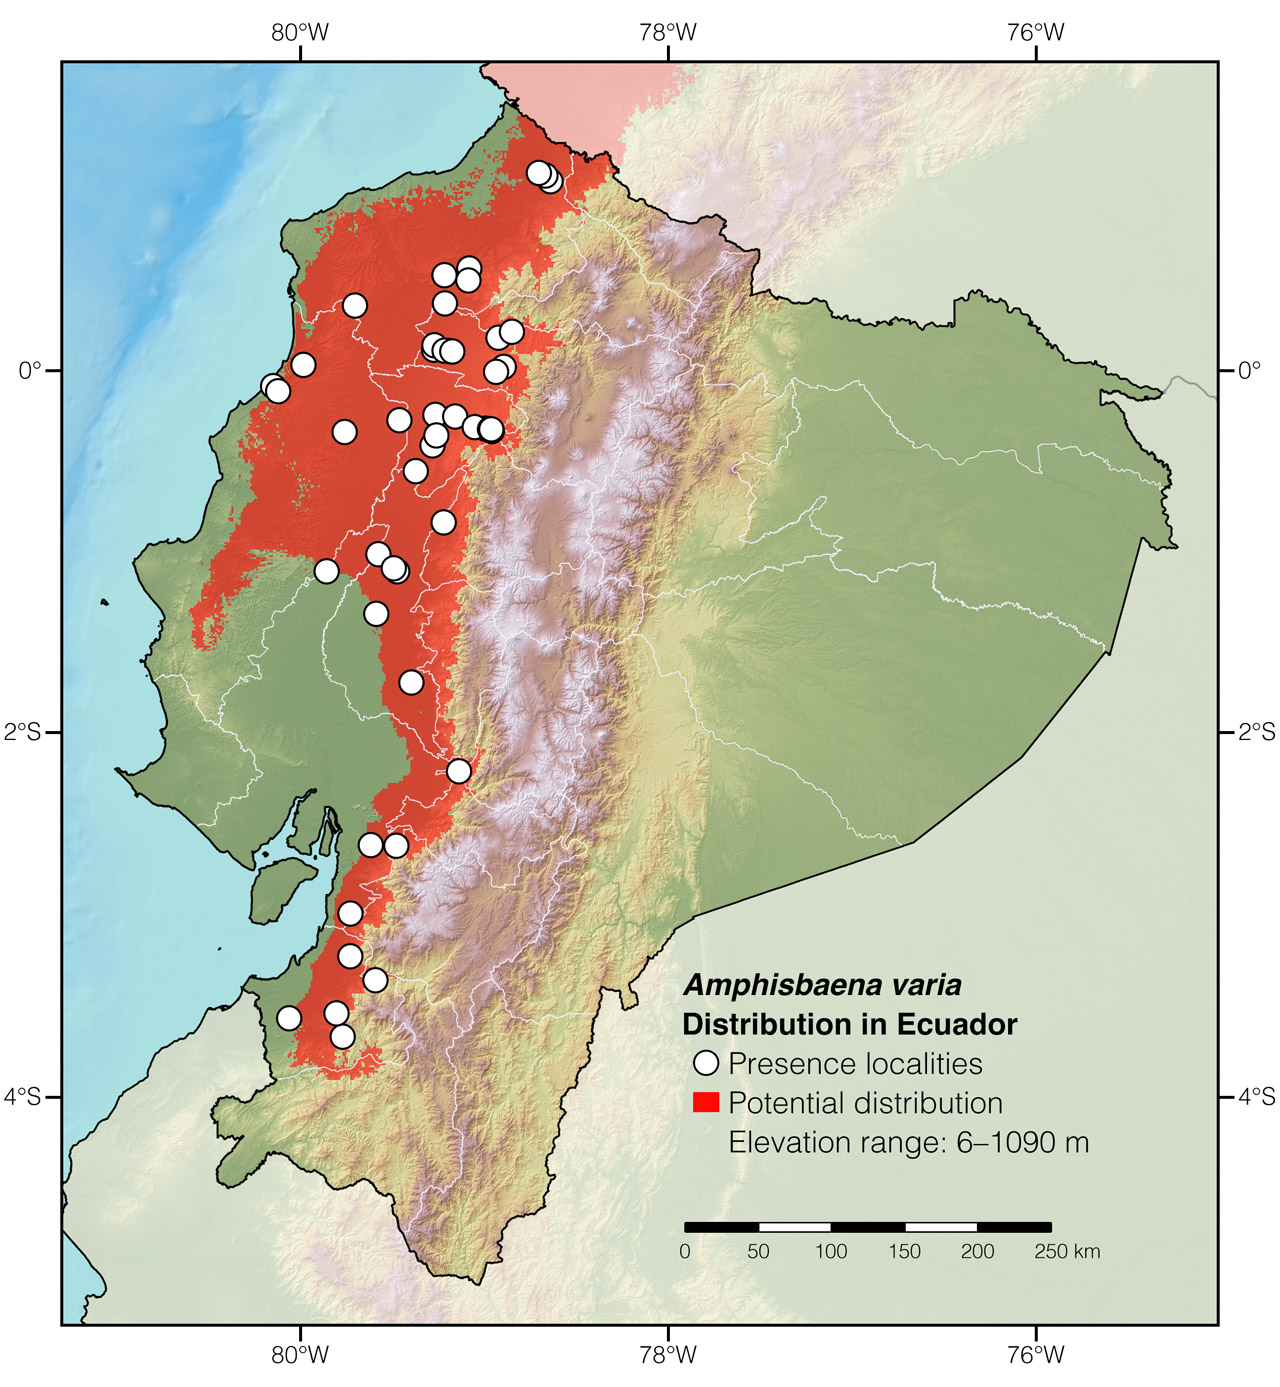 Distribution of Amphisbaena varia in Ecuador